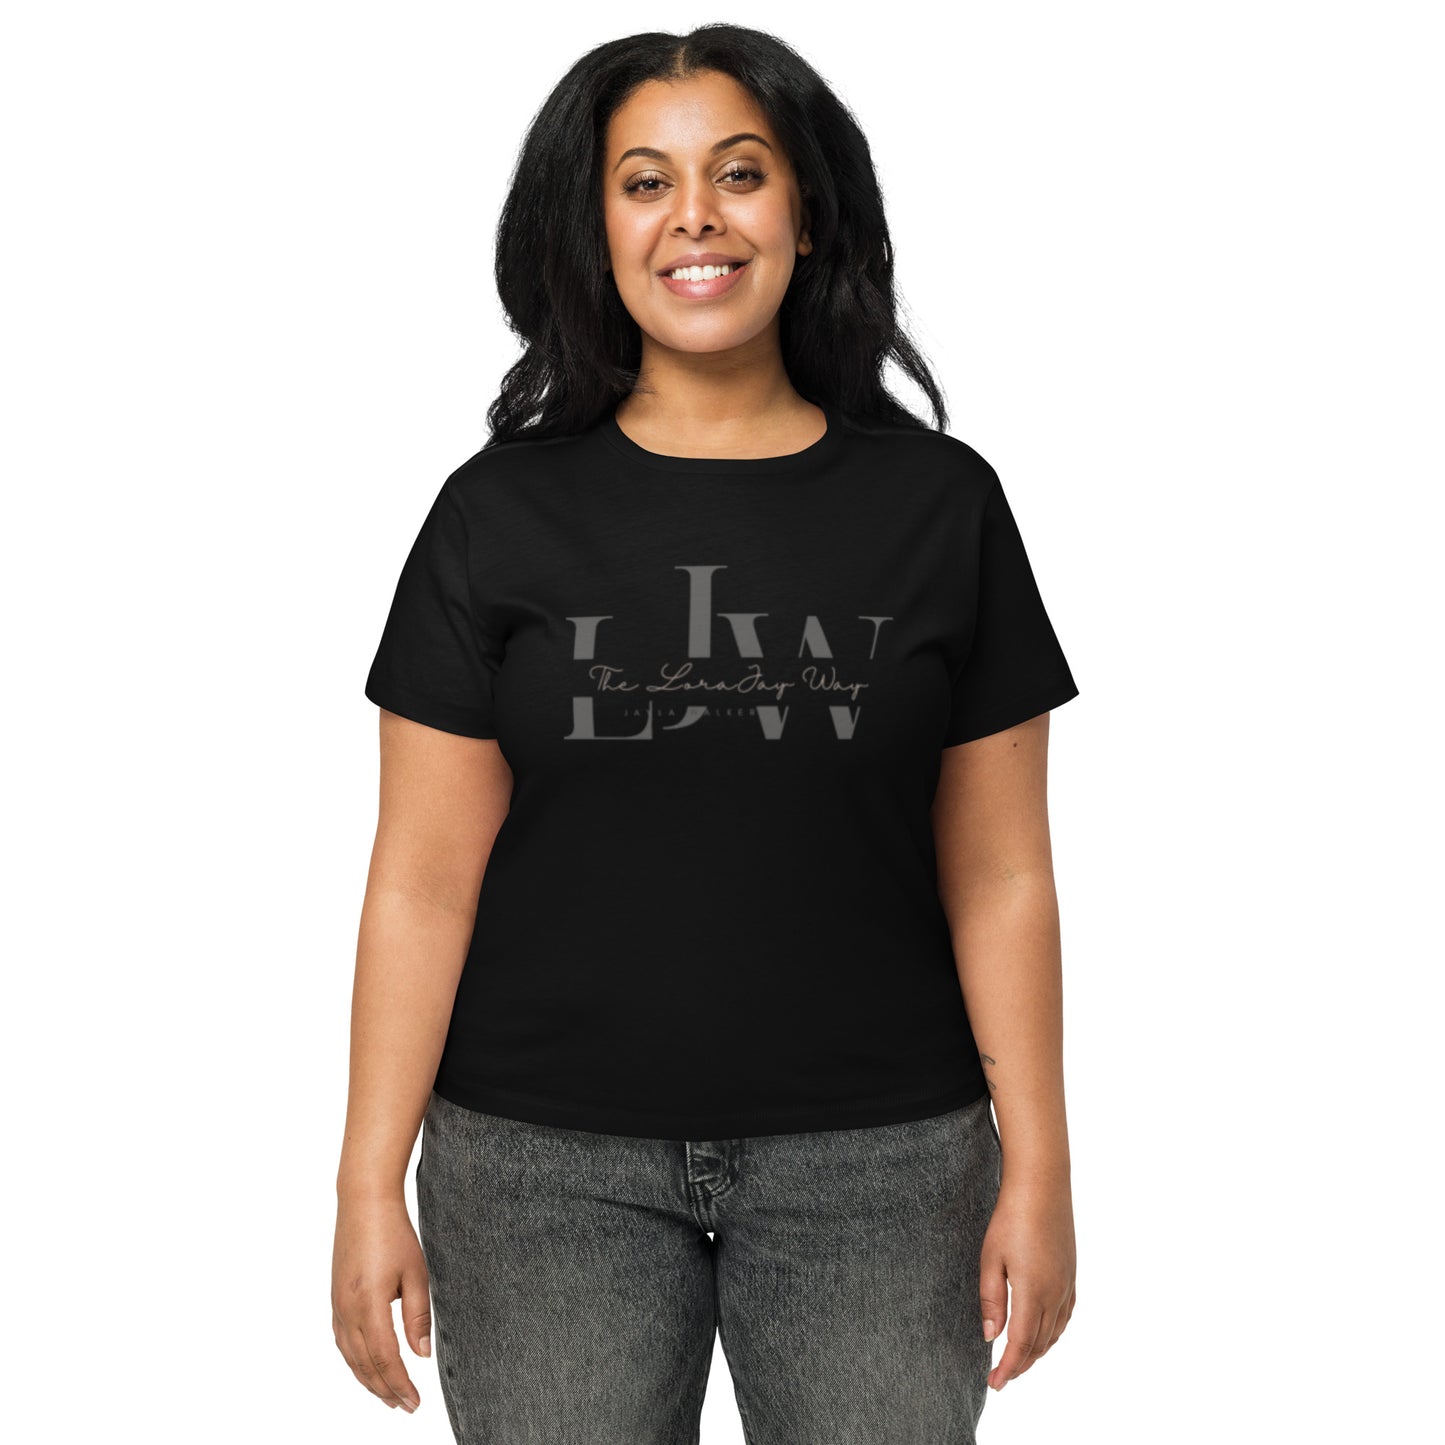 LoraJay Way Women’s High-Waisted T-Shirt